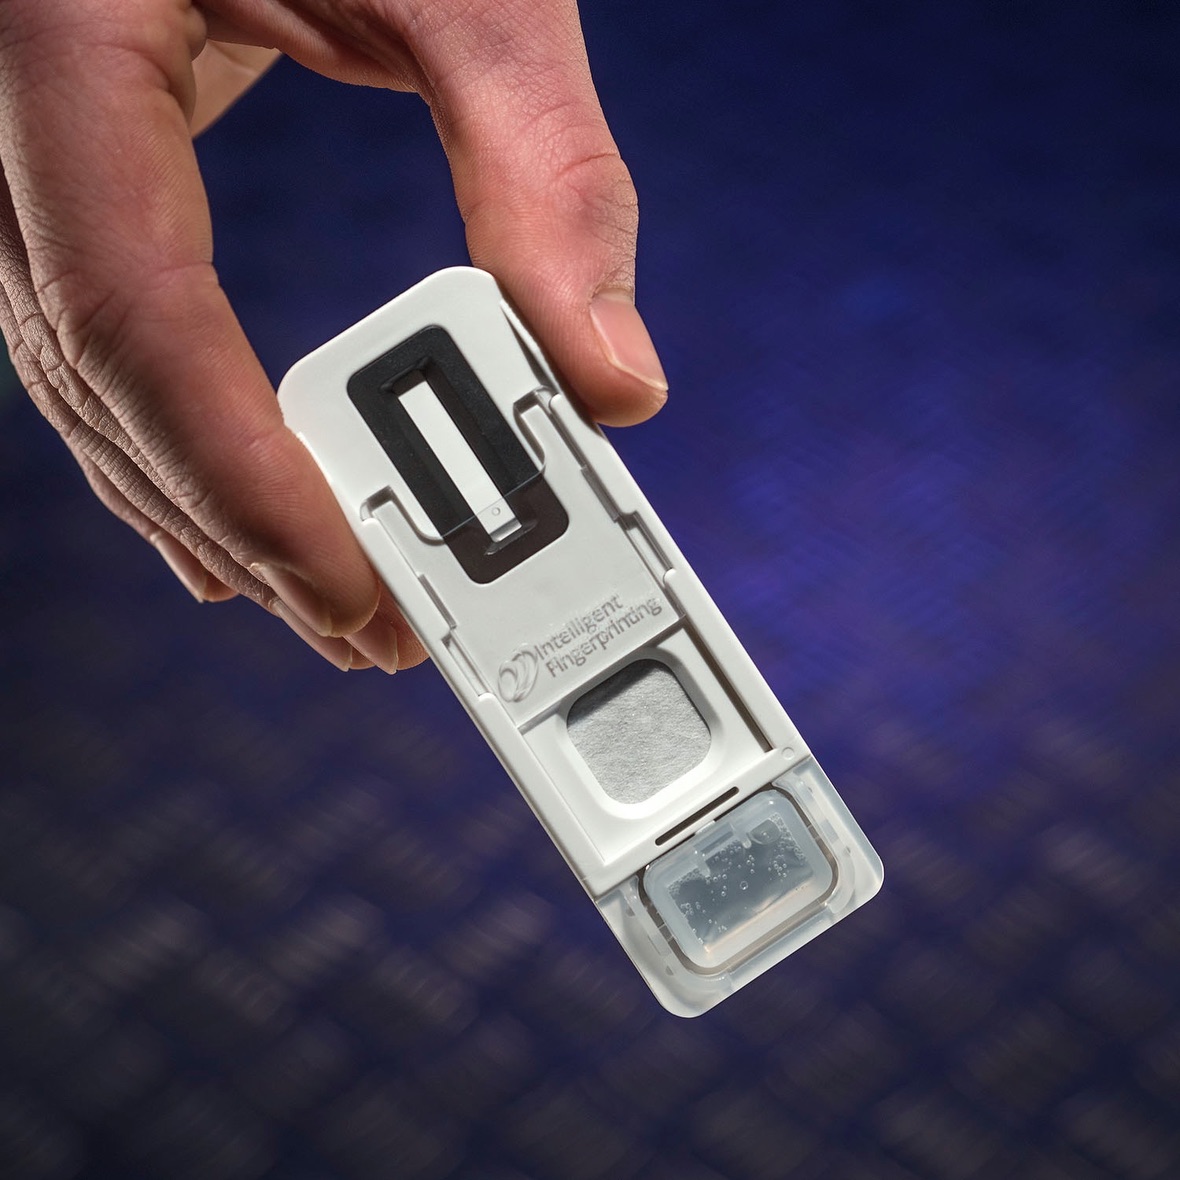 An introductory video demonstrating fingerprint-based drug testing in action.